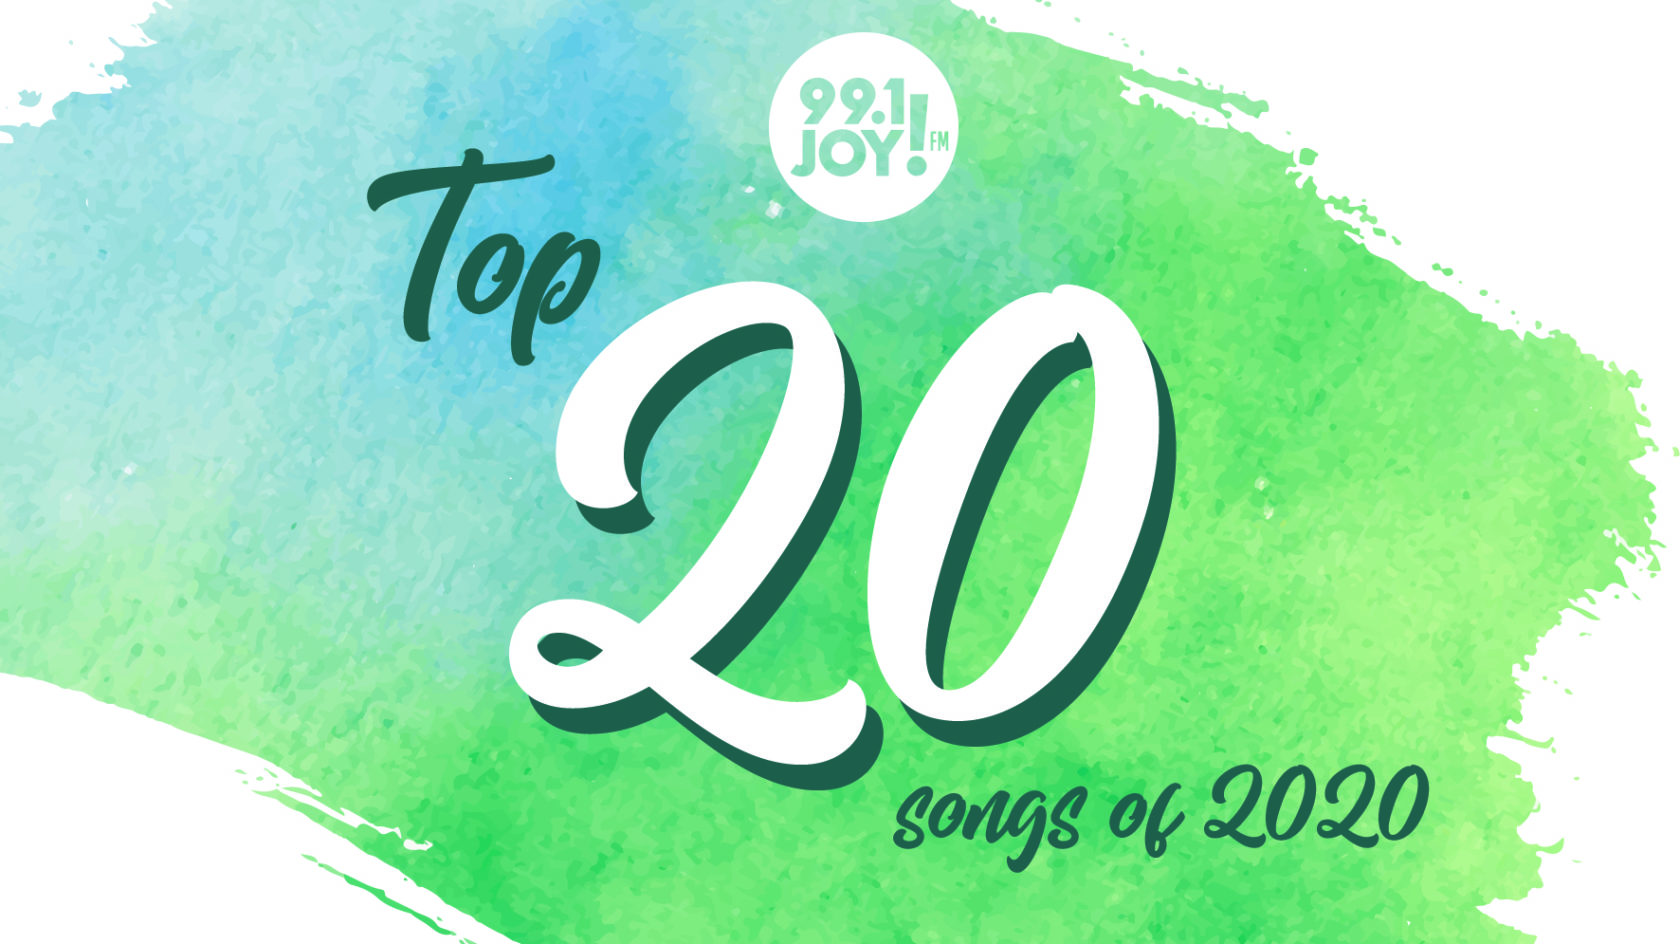 JOY FM's Top 20 Songs of 2020